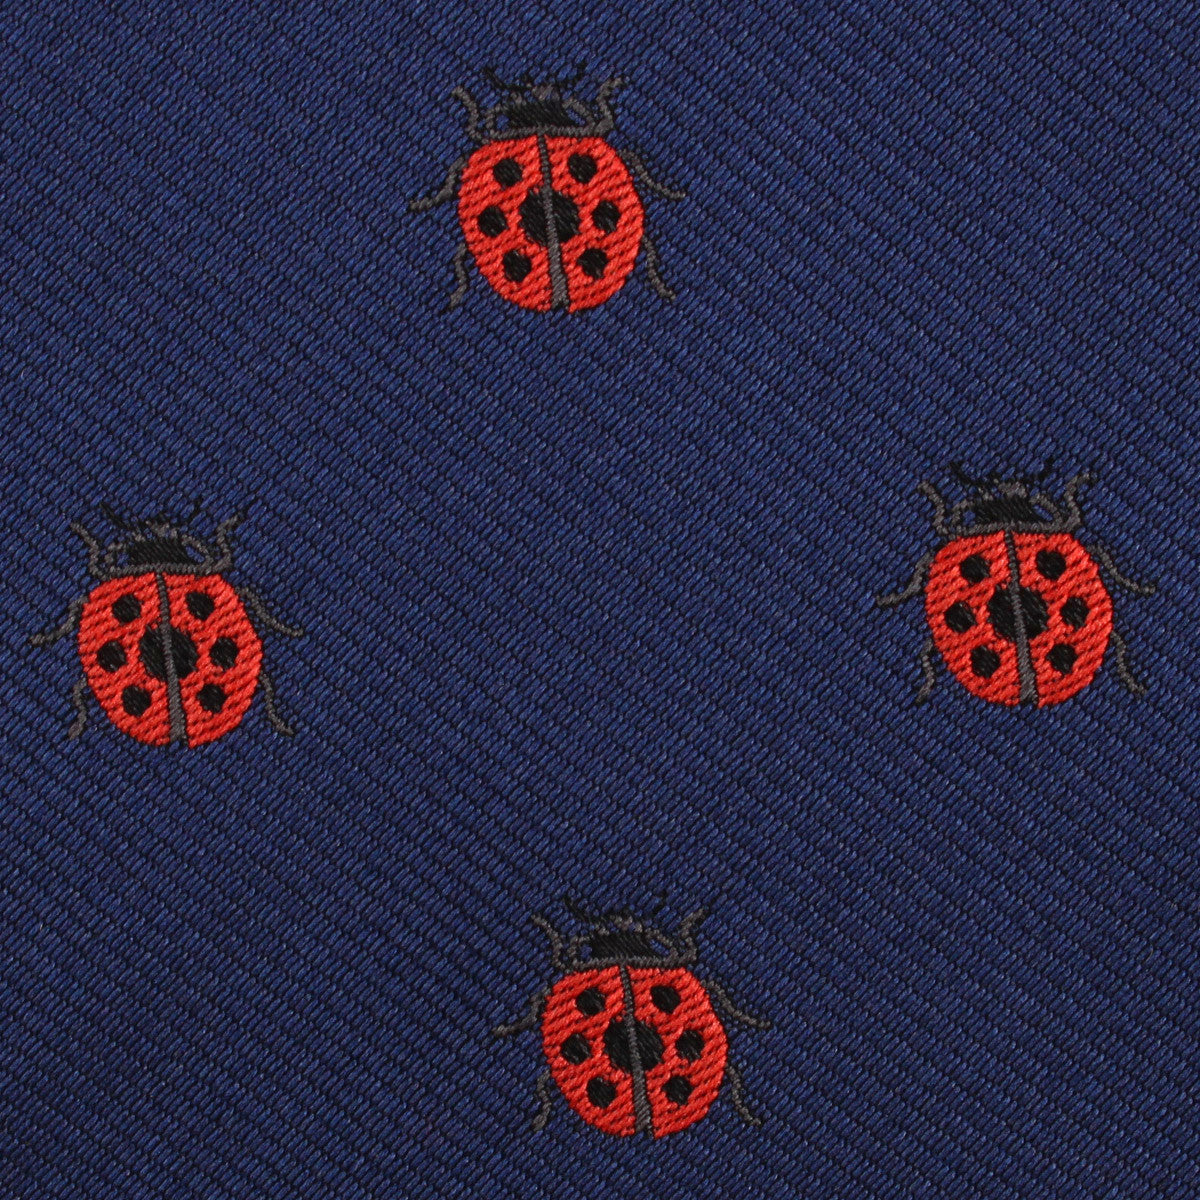 Ladybird Beetle Fabric Pocket Square